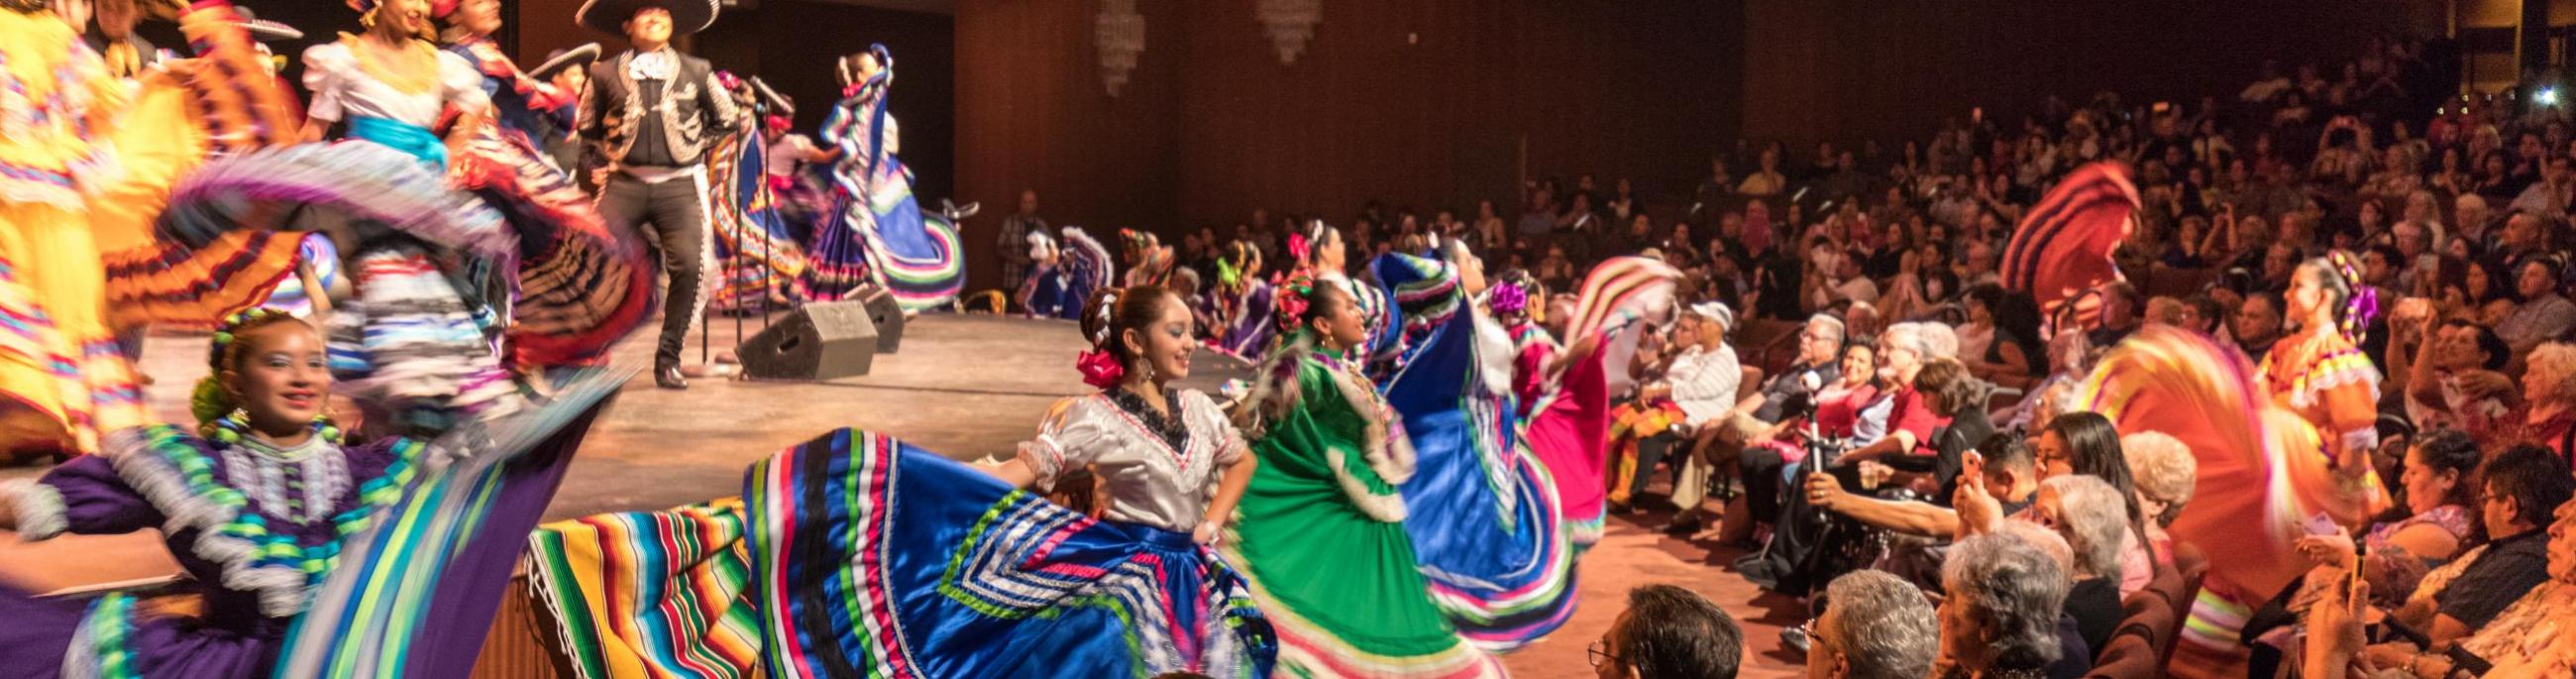 Chandler Center for the Arts Celebrates Hispanic Heritage Month